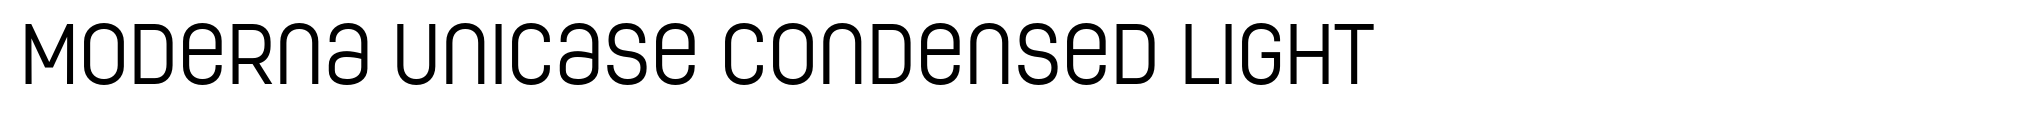 Moderna Unicase Condensed Light image